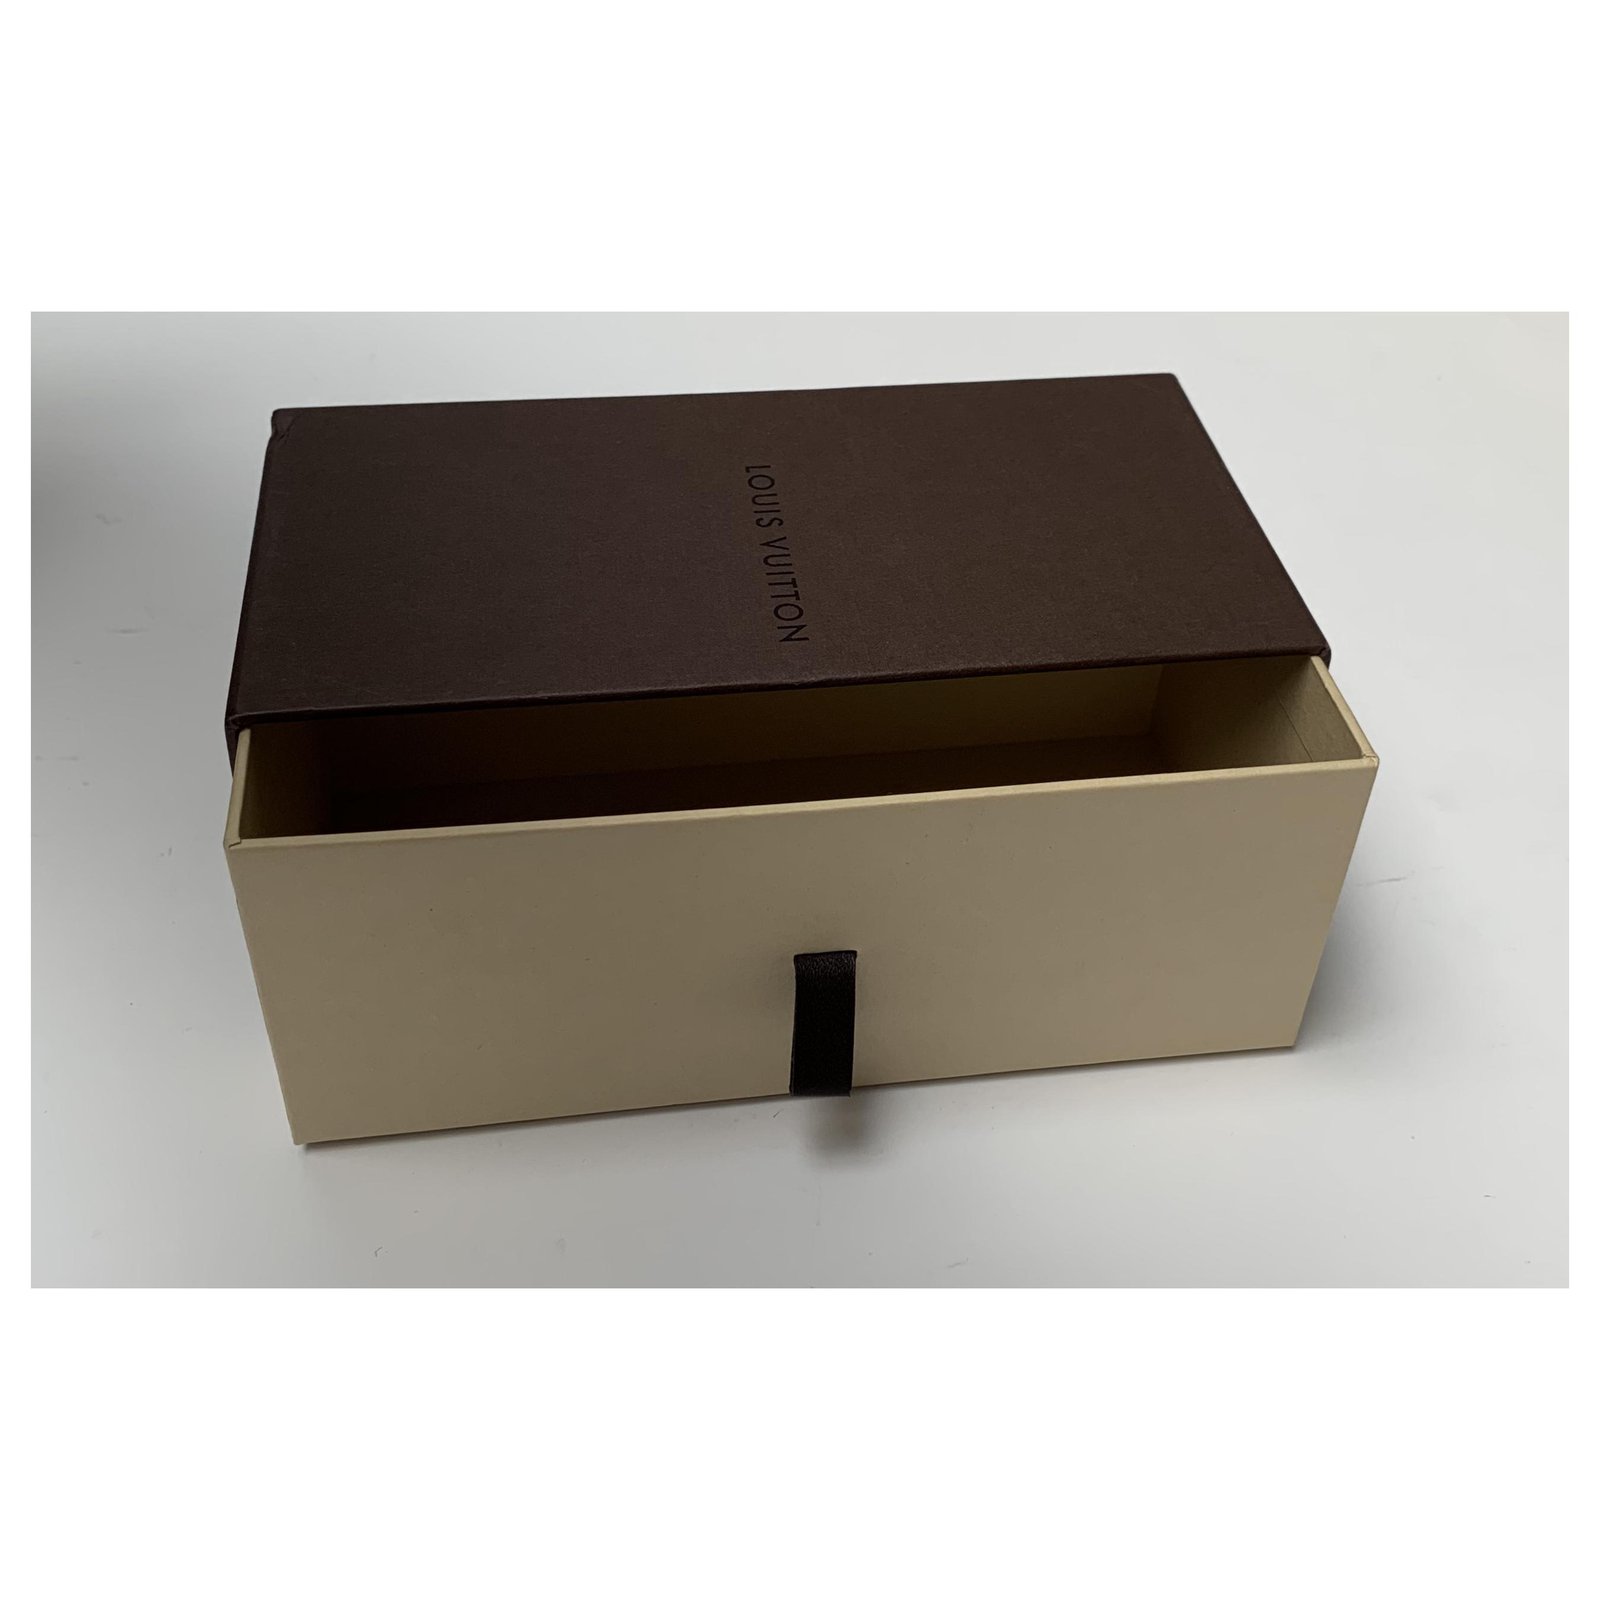 Louis Vuitton Gift Storage Box - Brown Large Empty 19 x 17.5 x